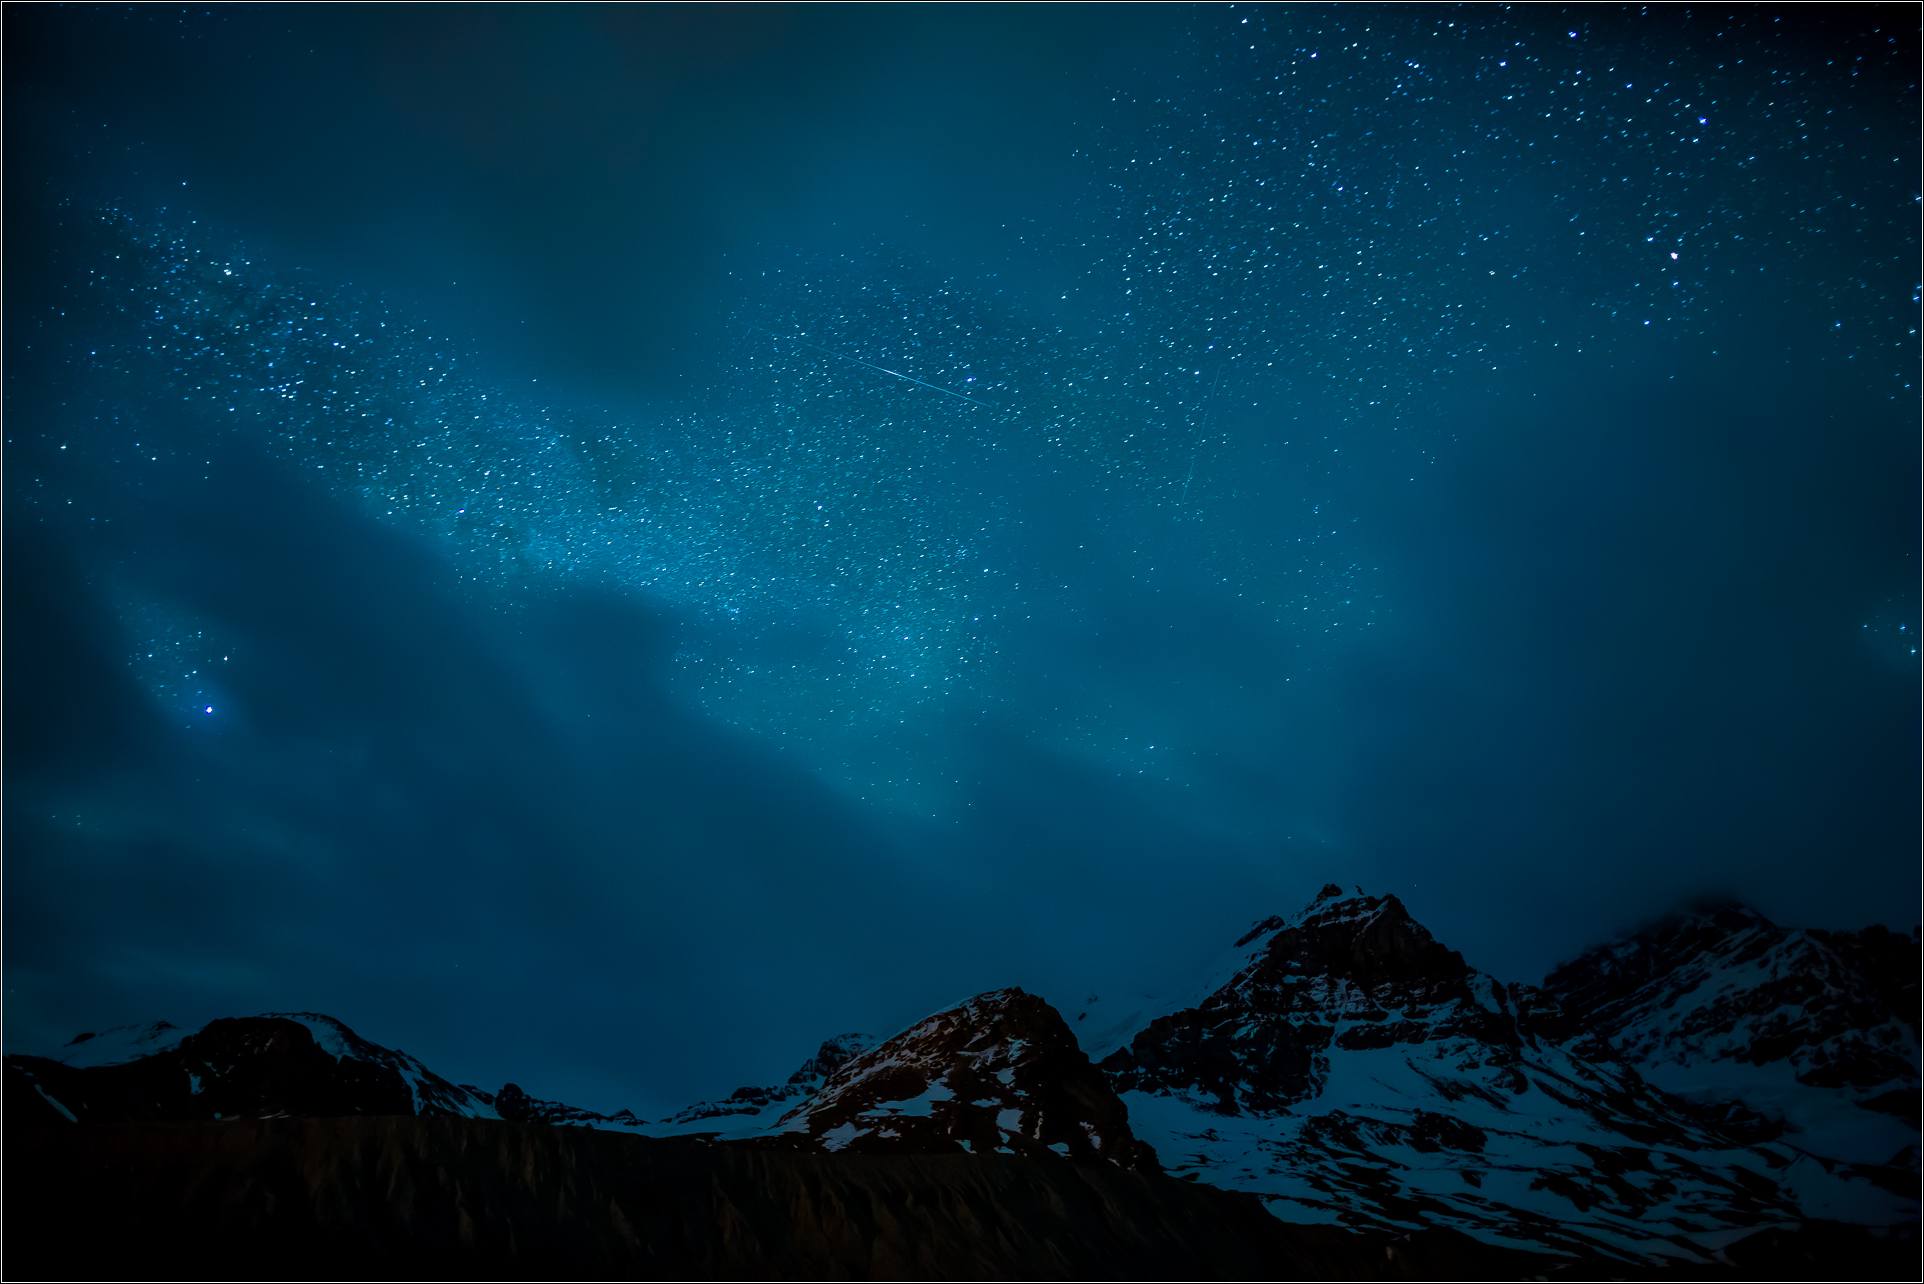 https://chrismartinphotography.files.wordpress.com/2015/06/athabasca-glacier-under-the-stars-c2a9-christopher-martin-photography-0660-2.jpg